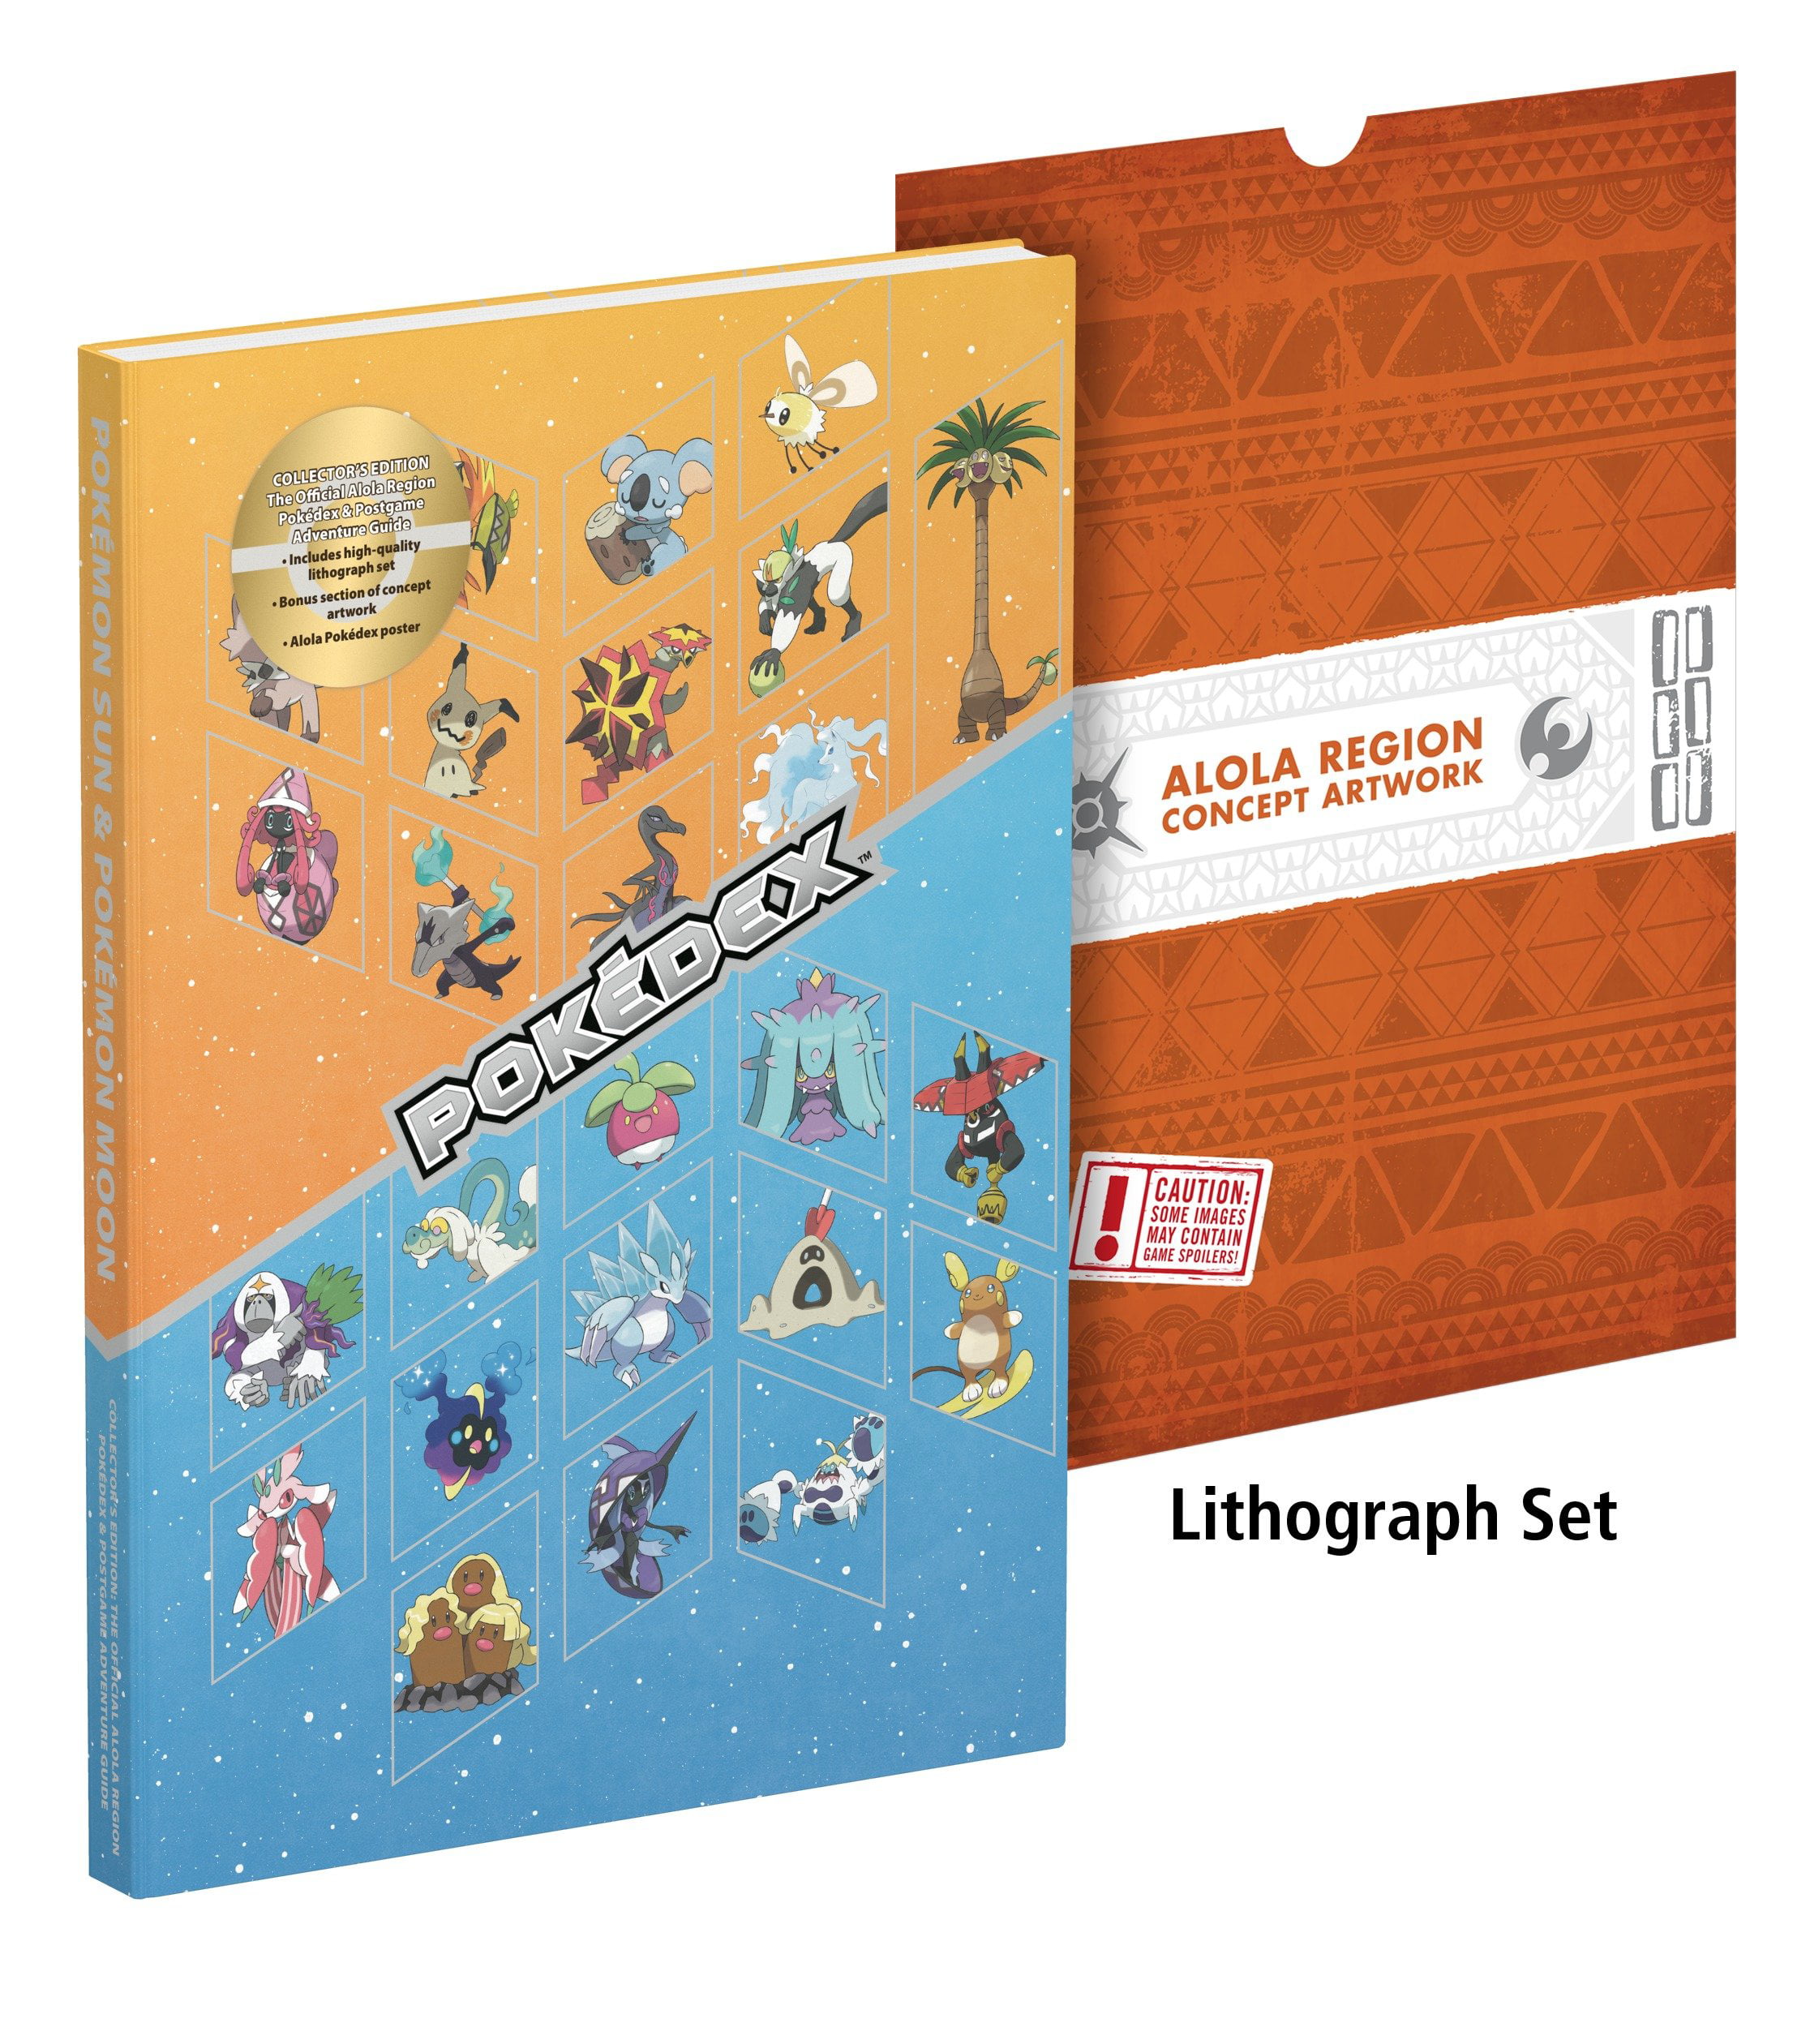 Pokémon Sun and Pokémon Moon: The Official Alola Region Collector's Edition  Pokédex & Postgame Adventure Guide, 9780744018141, Hardcover, Collectors 